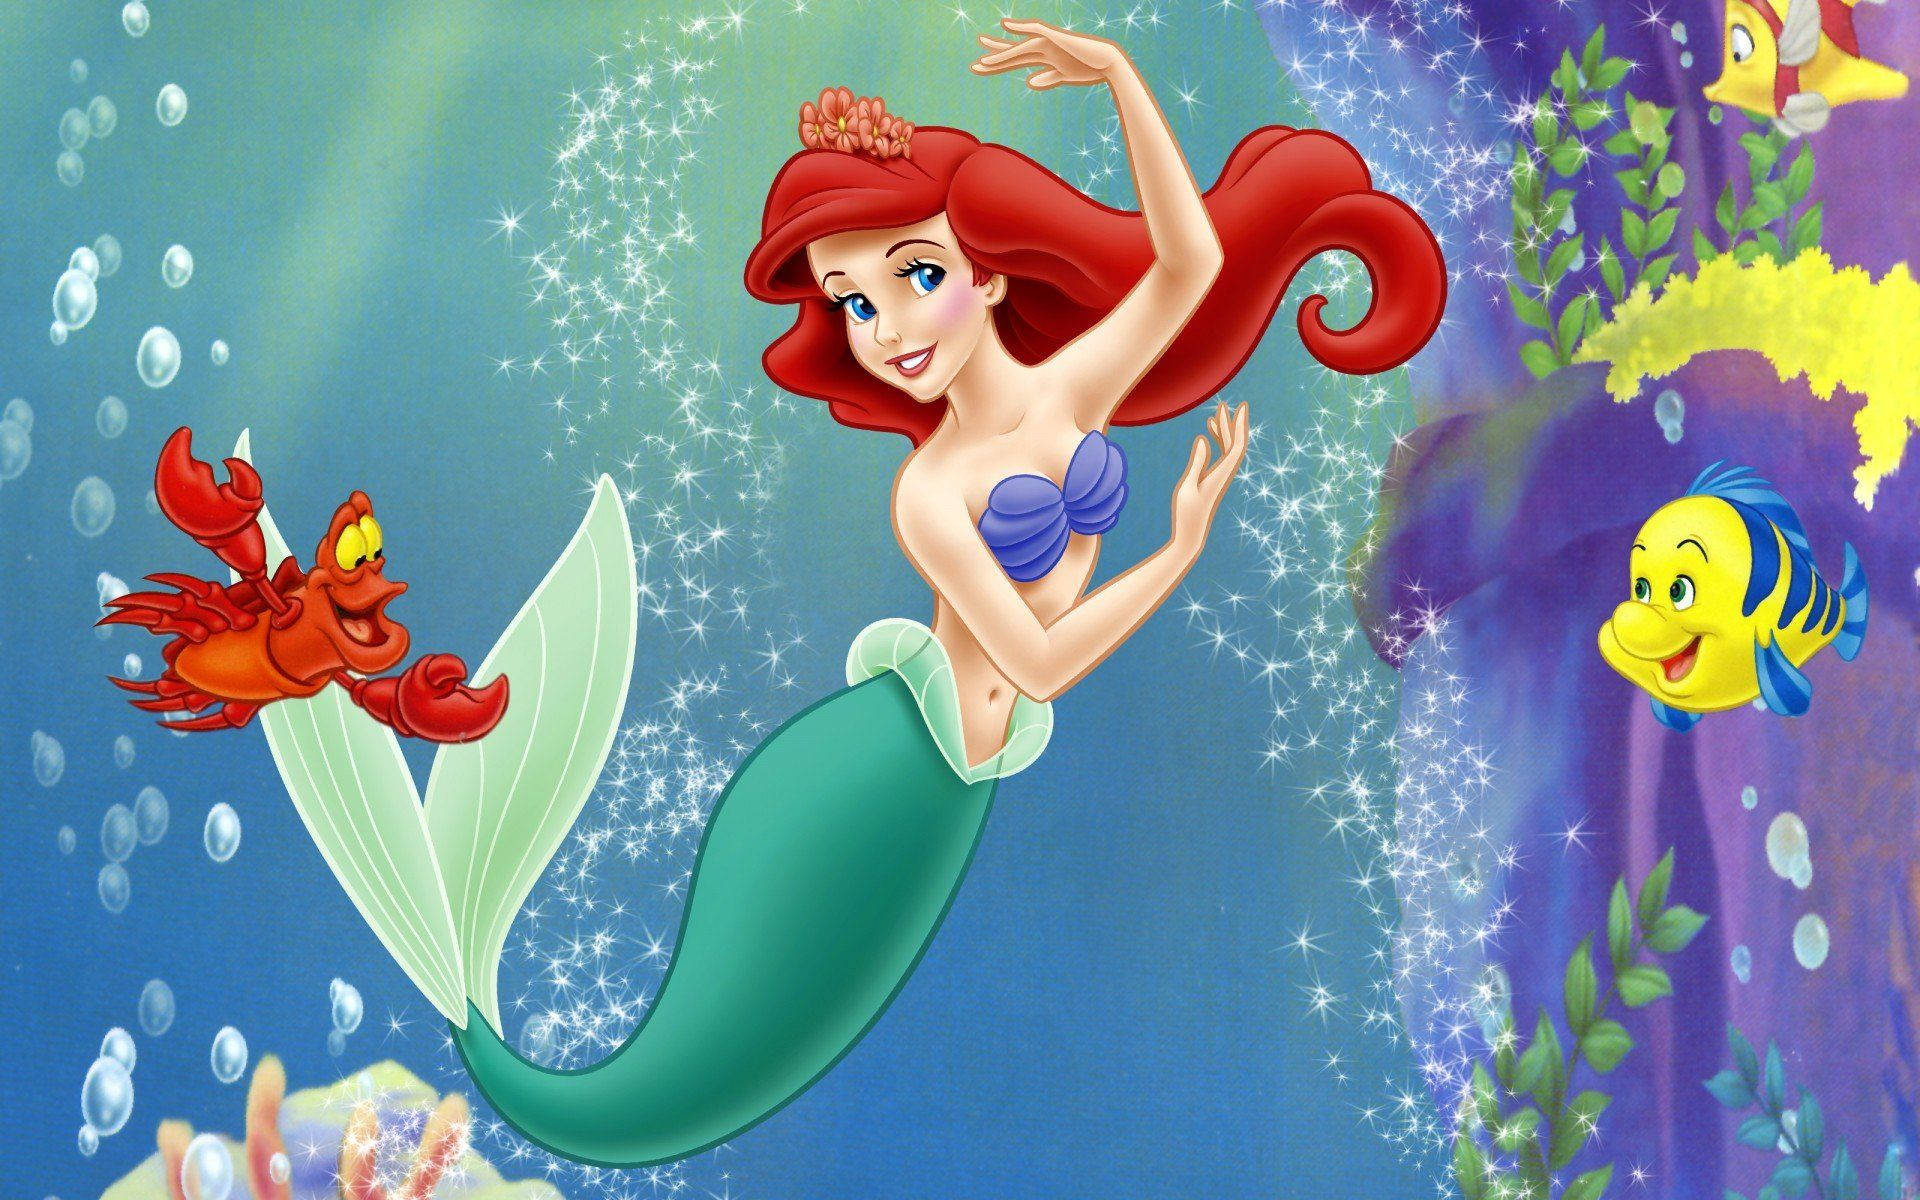 The Little Mermaid Ariel's Talent